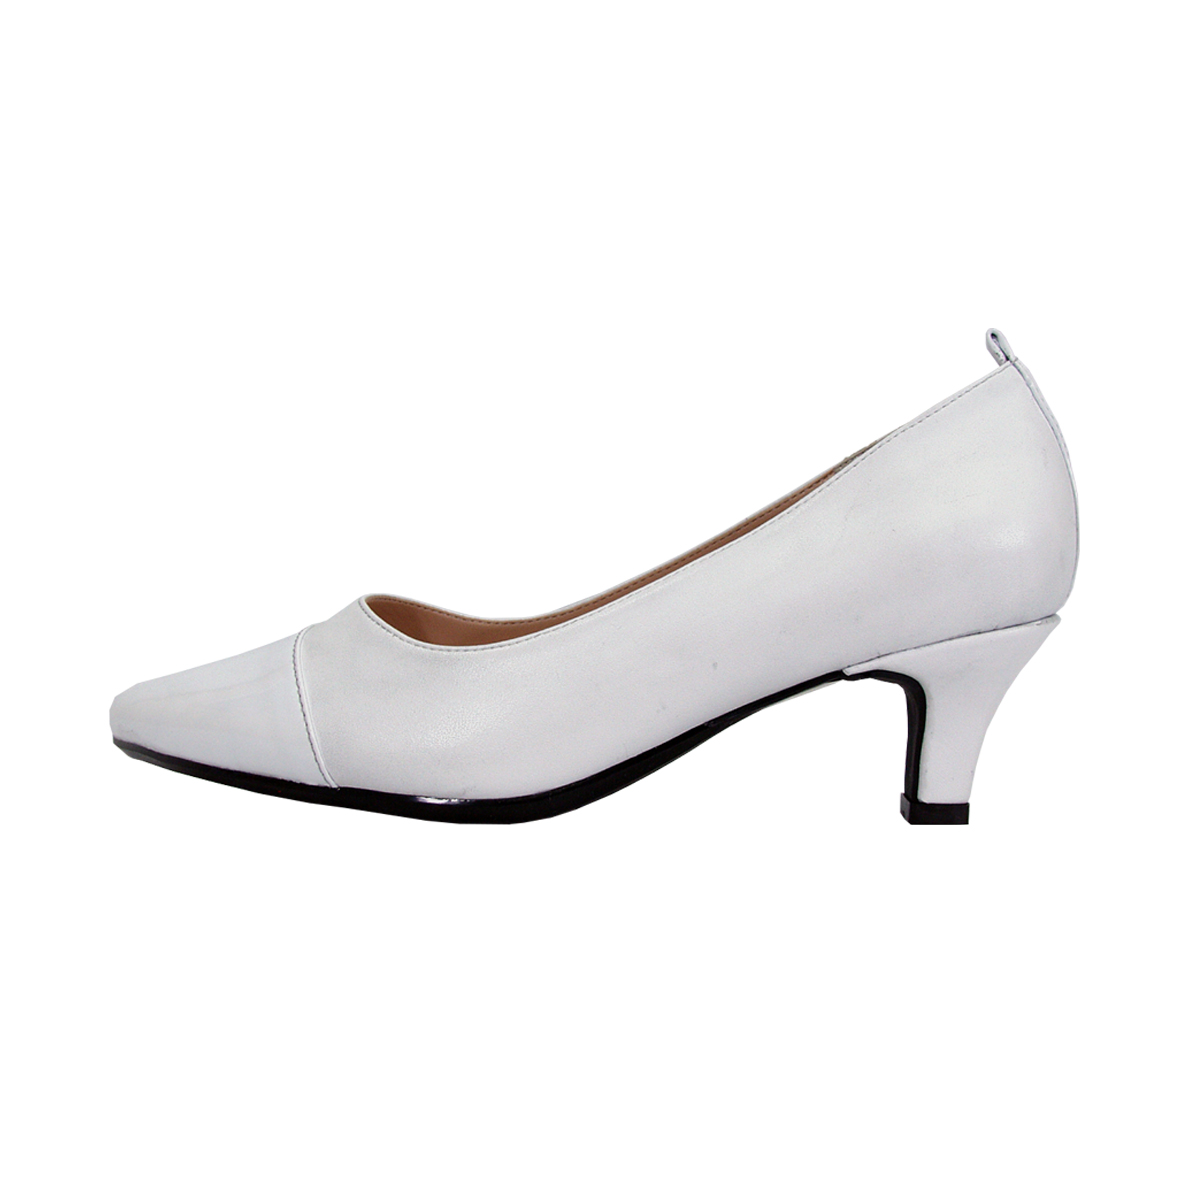 PEERAGE Arlene Women's Wide Width Casual Comfort Mid Heel Dress Shoes for Wedding, Prom, Evening, Work WHITE 7.5 - image 3 of 6